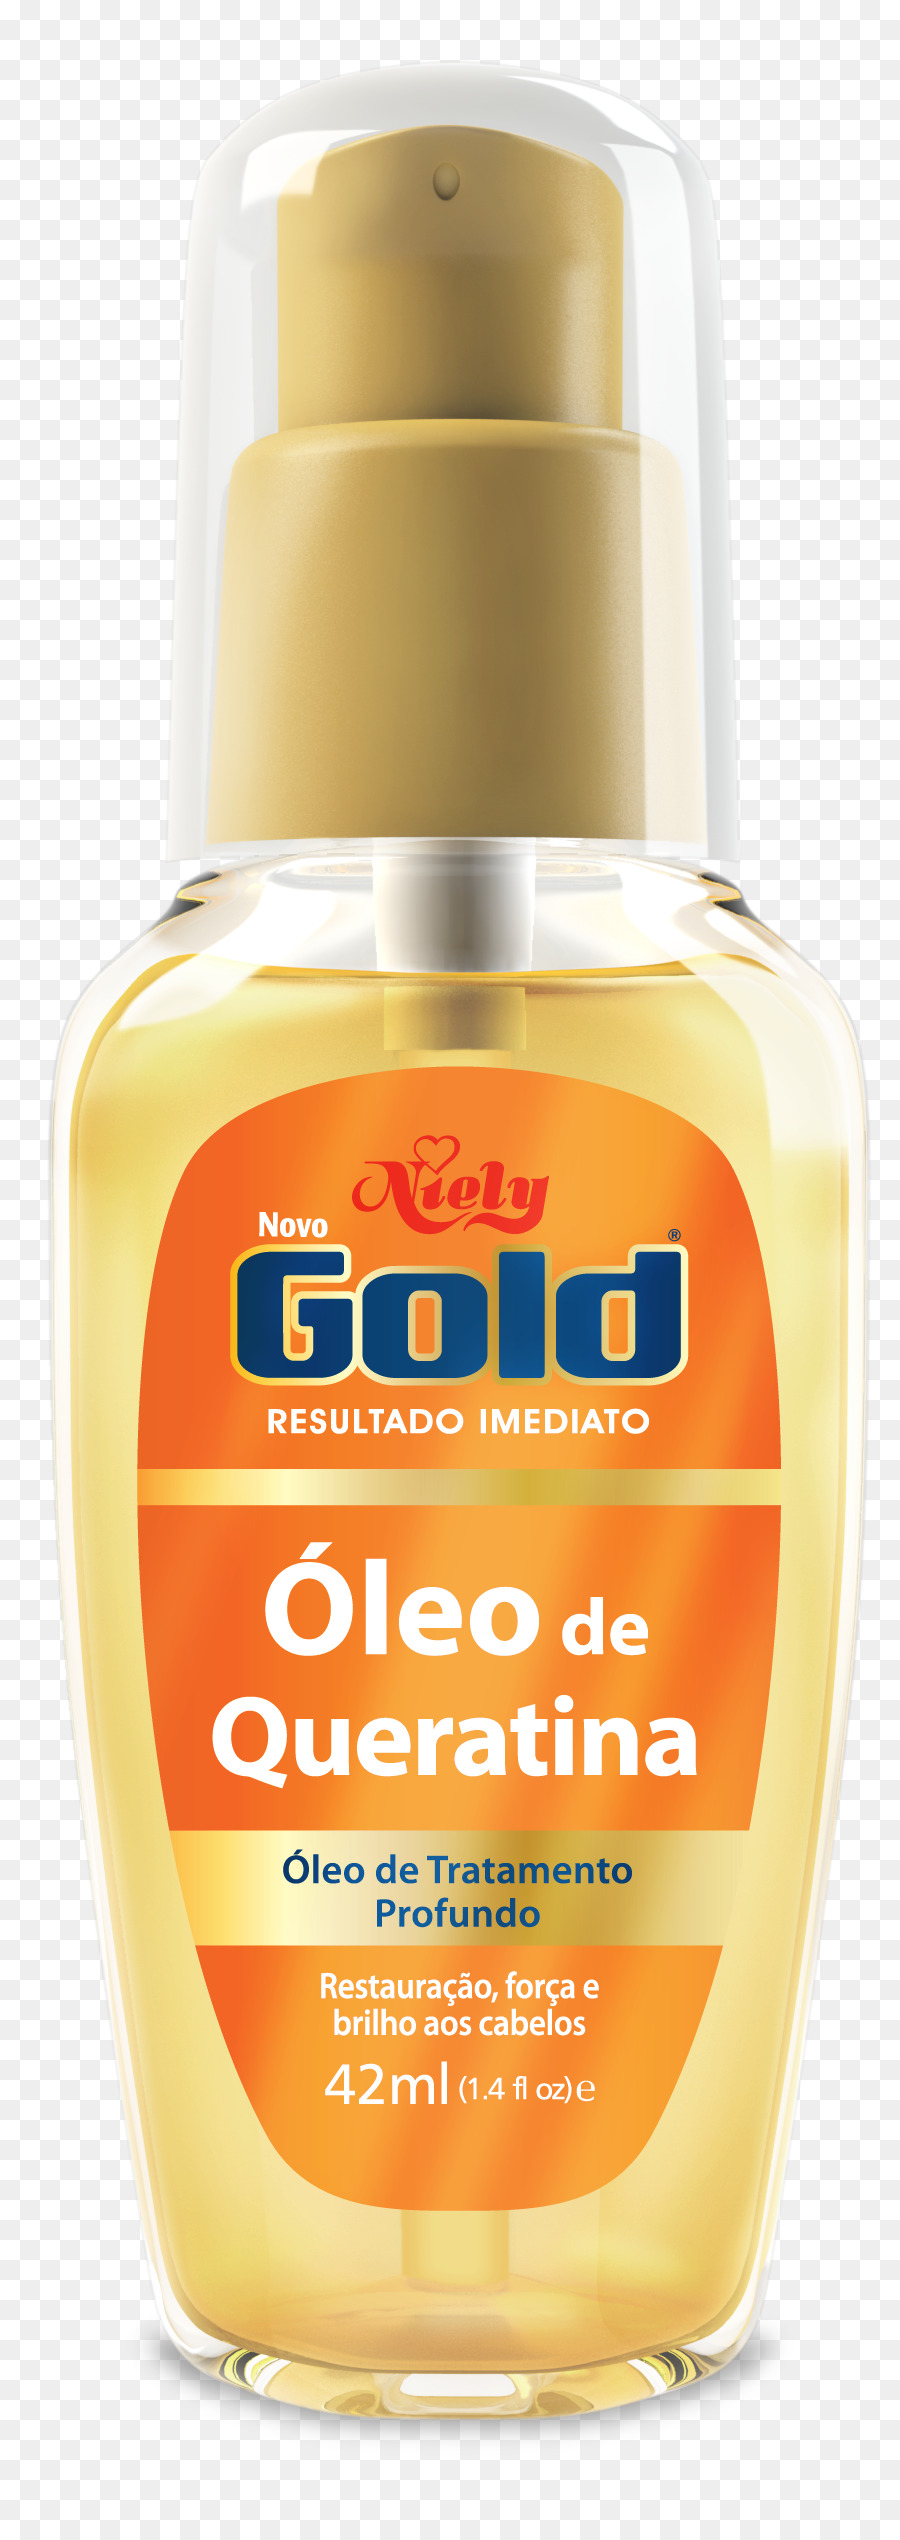 Niely Do Brasil Industrial Ltda. L'olio di Argan, Cheratina Cosmetici - olio